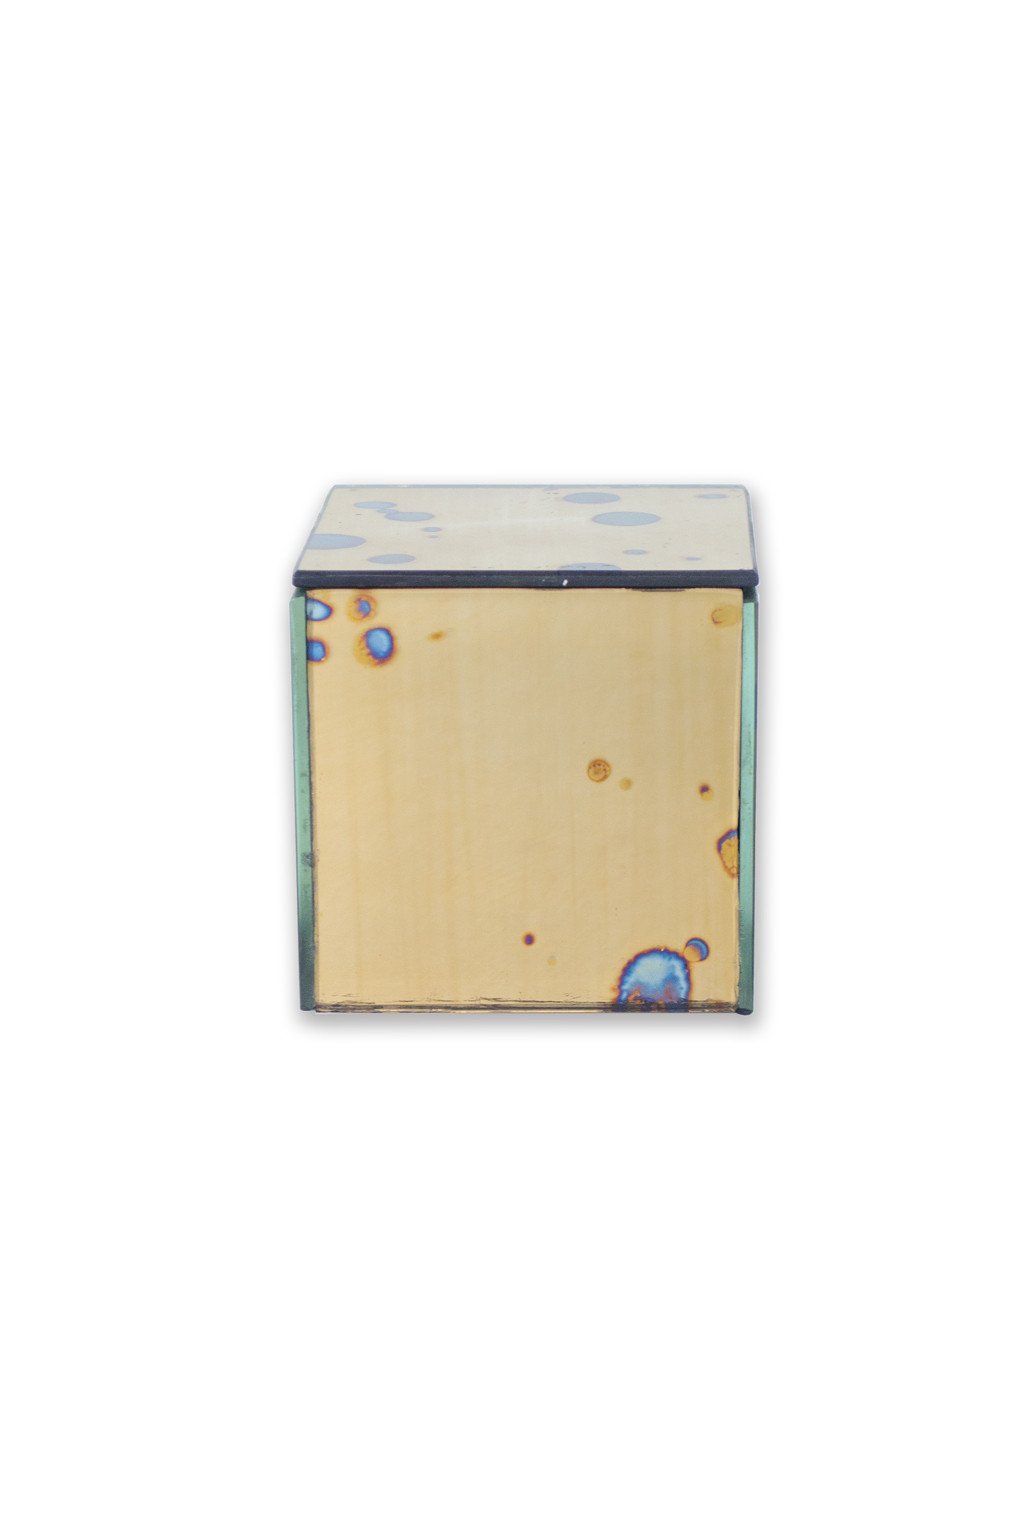 Small Square Arte Gold Mirrored Box - Two Penny Blue